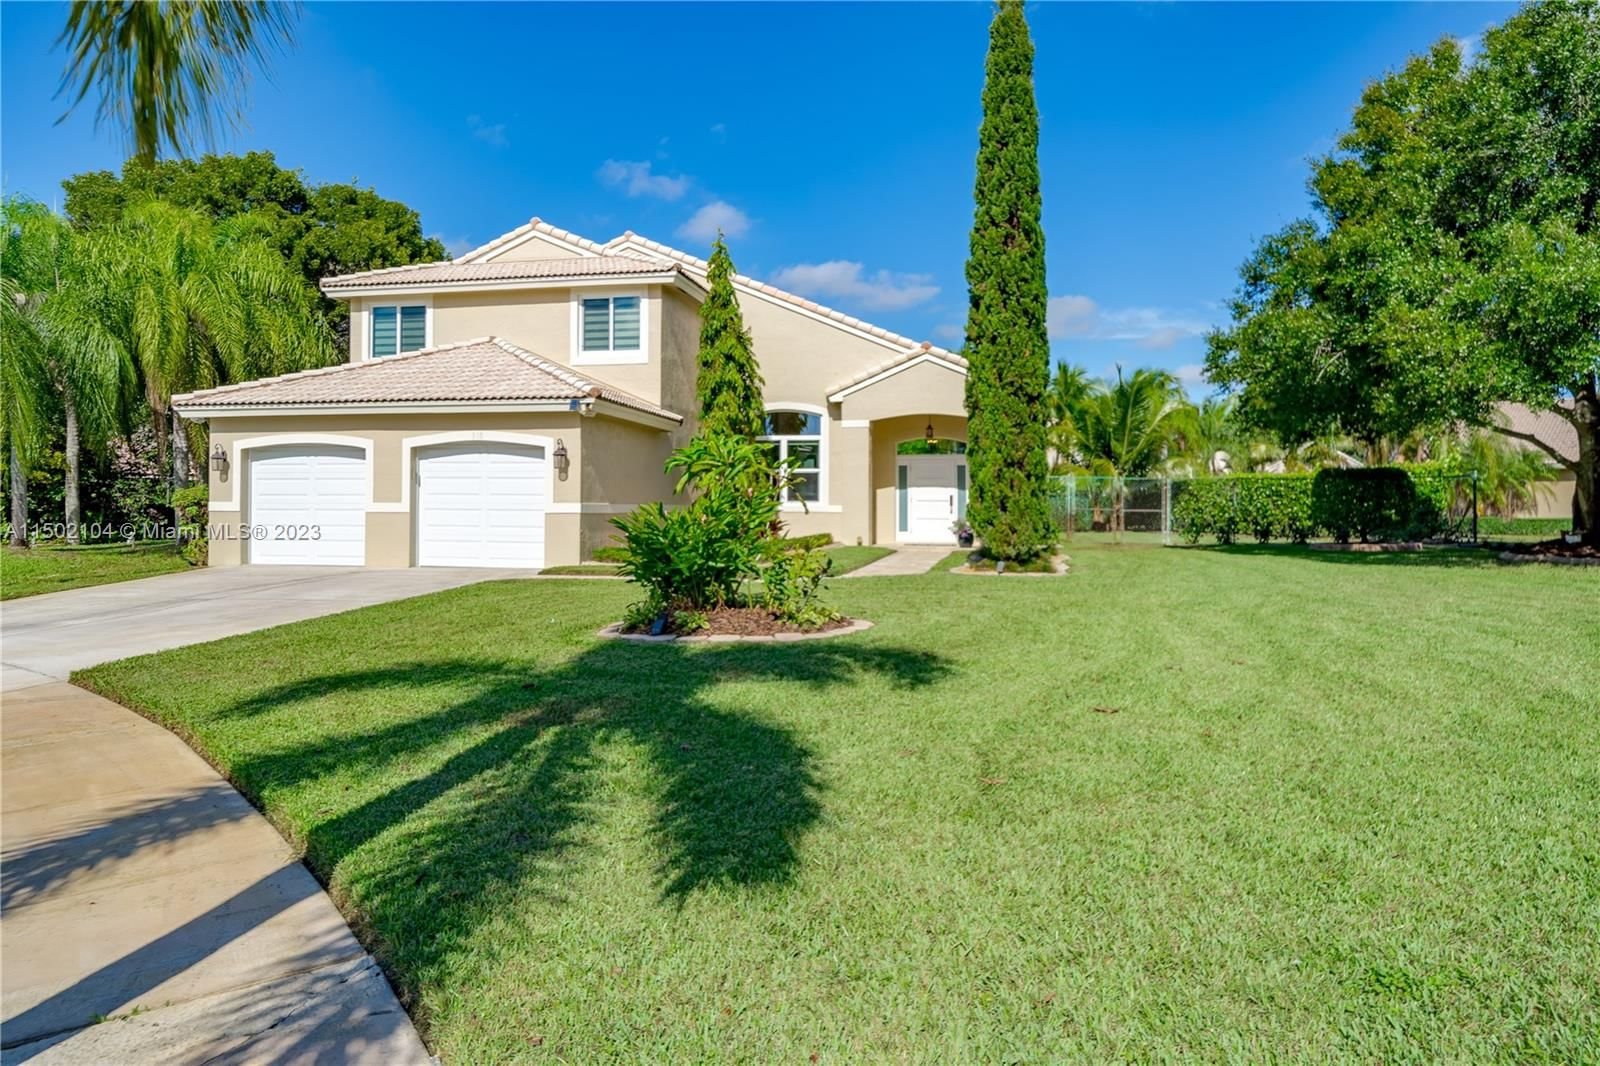 Real estate property located at 318 163rd Ave, Broward County, HEFTLER HOMES AT PEMBROKE, Pembroke Pines, FL